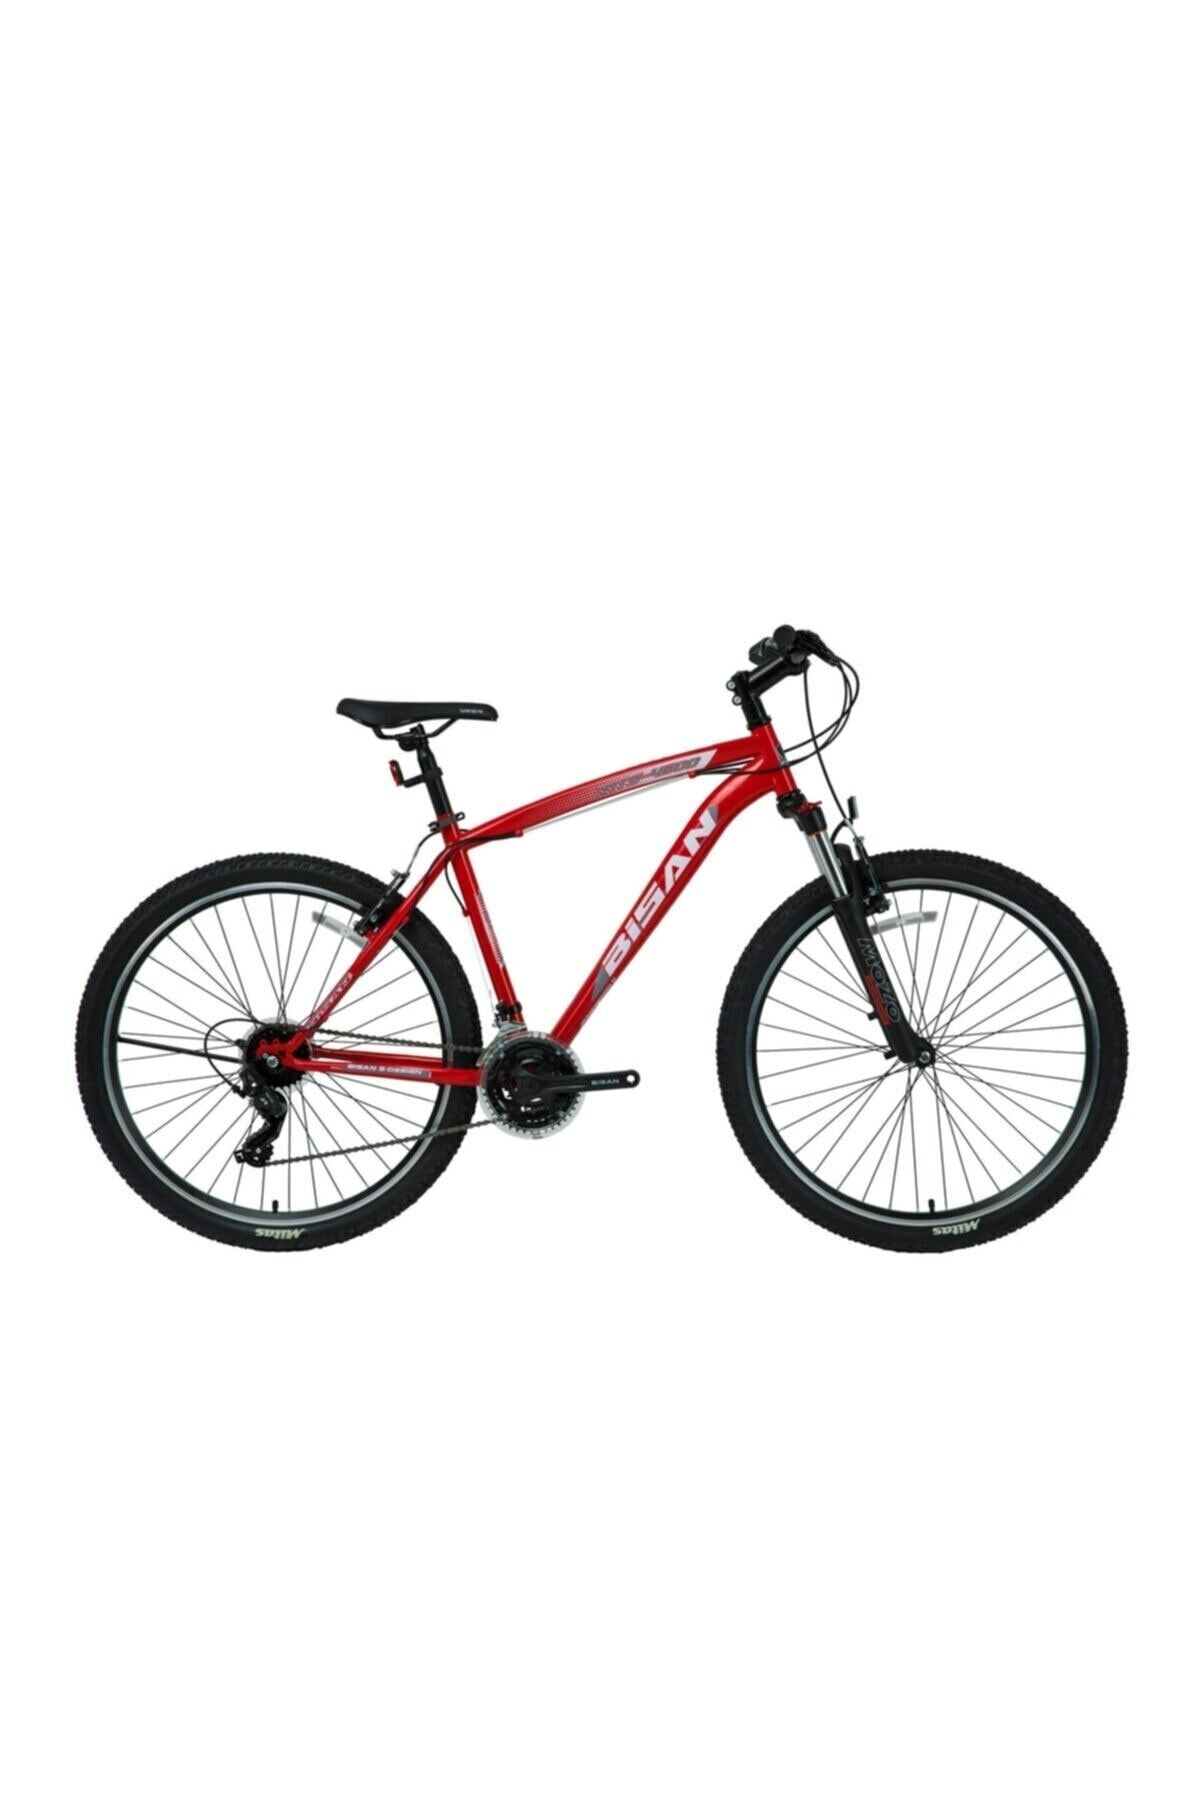 Bisan MTS 4600 27.5 Jant V Fren Dağ Bisikleti Kırmızı-Beyaz